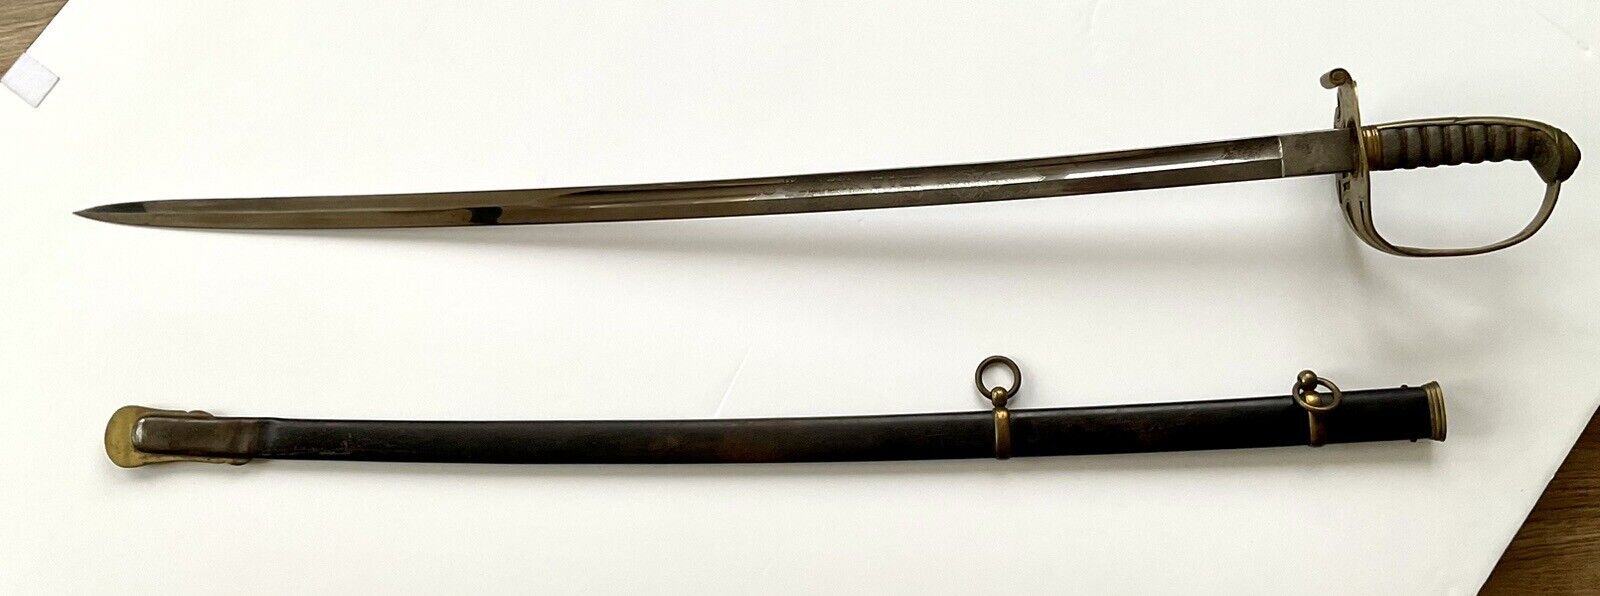 Civil War Model 1850 Non-Regulation Officers Sword w/Scabbard-UNION